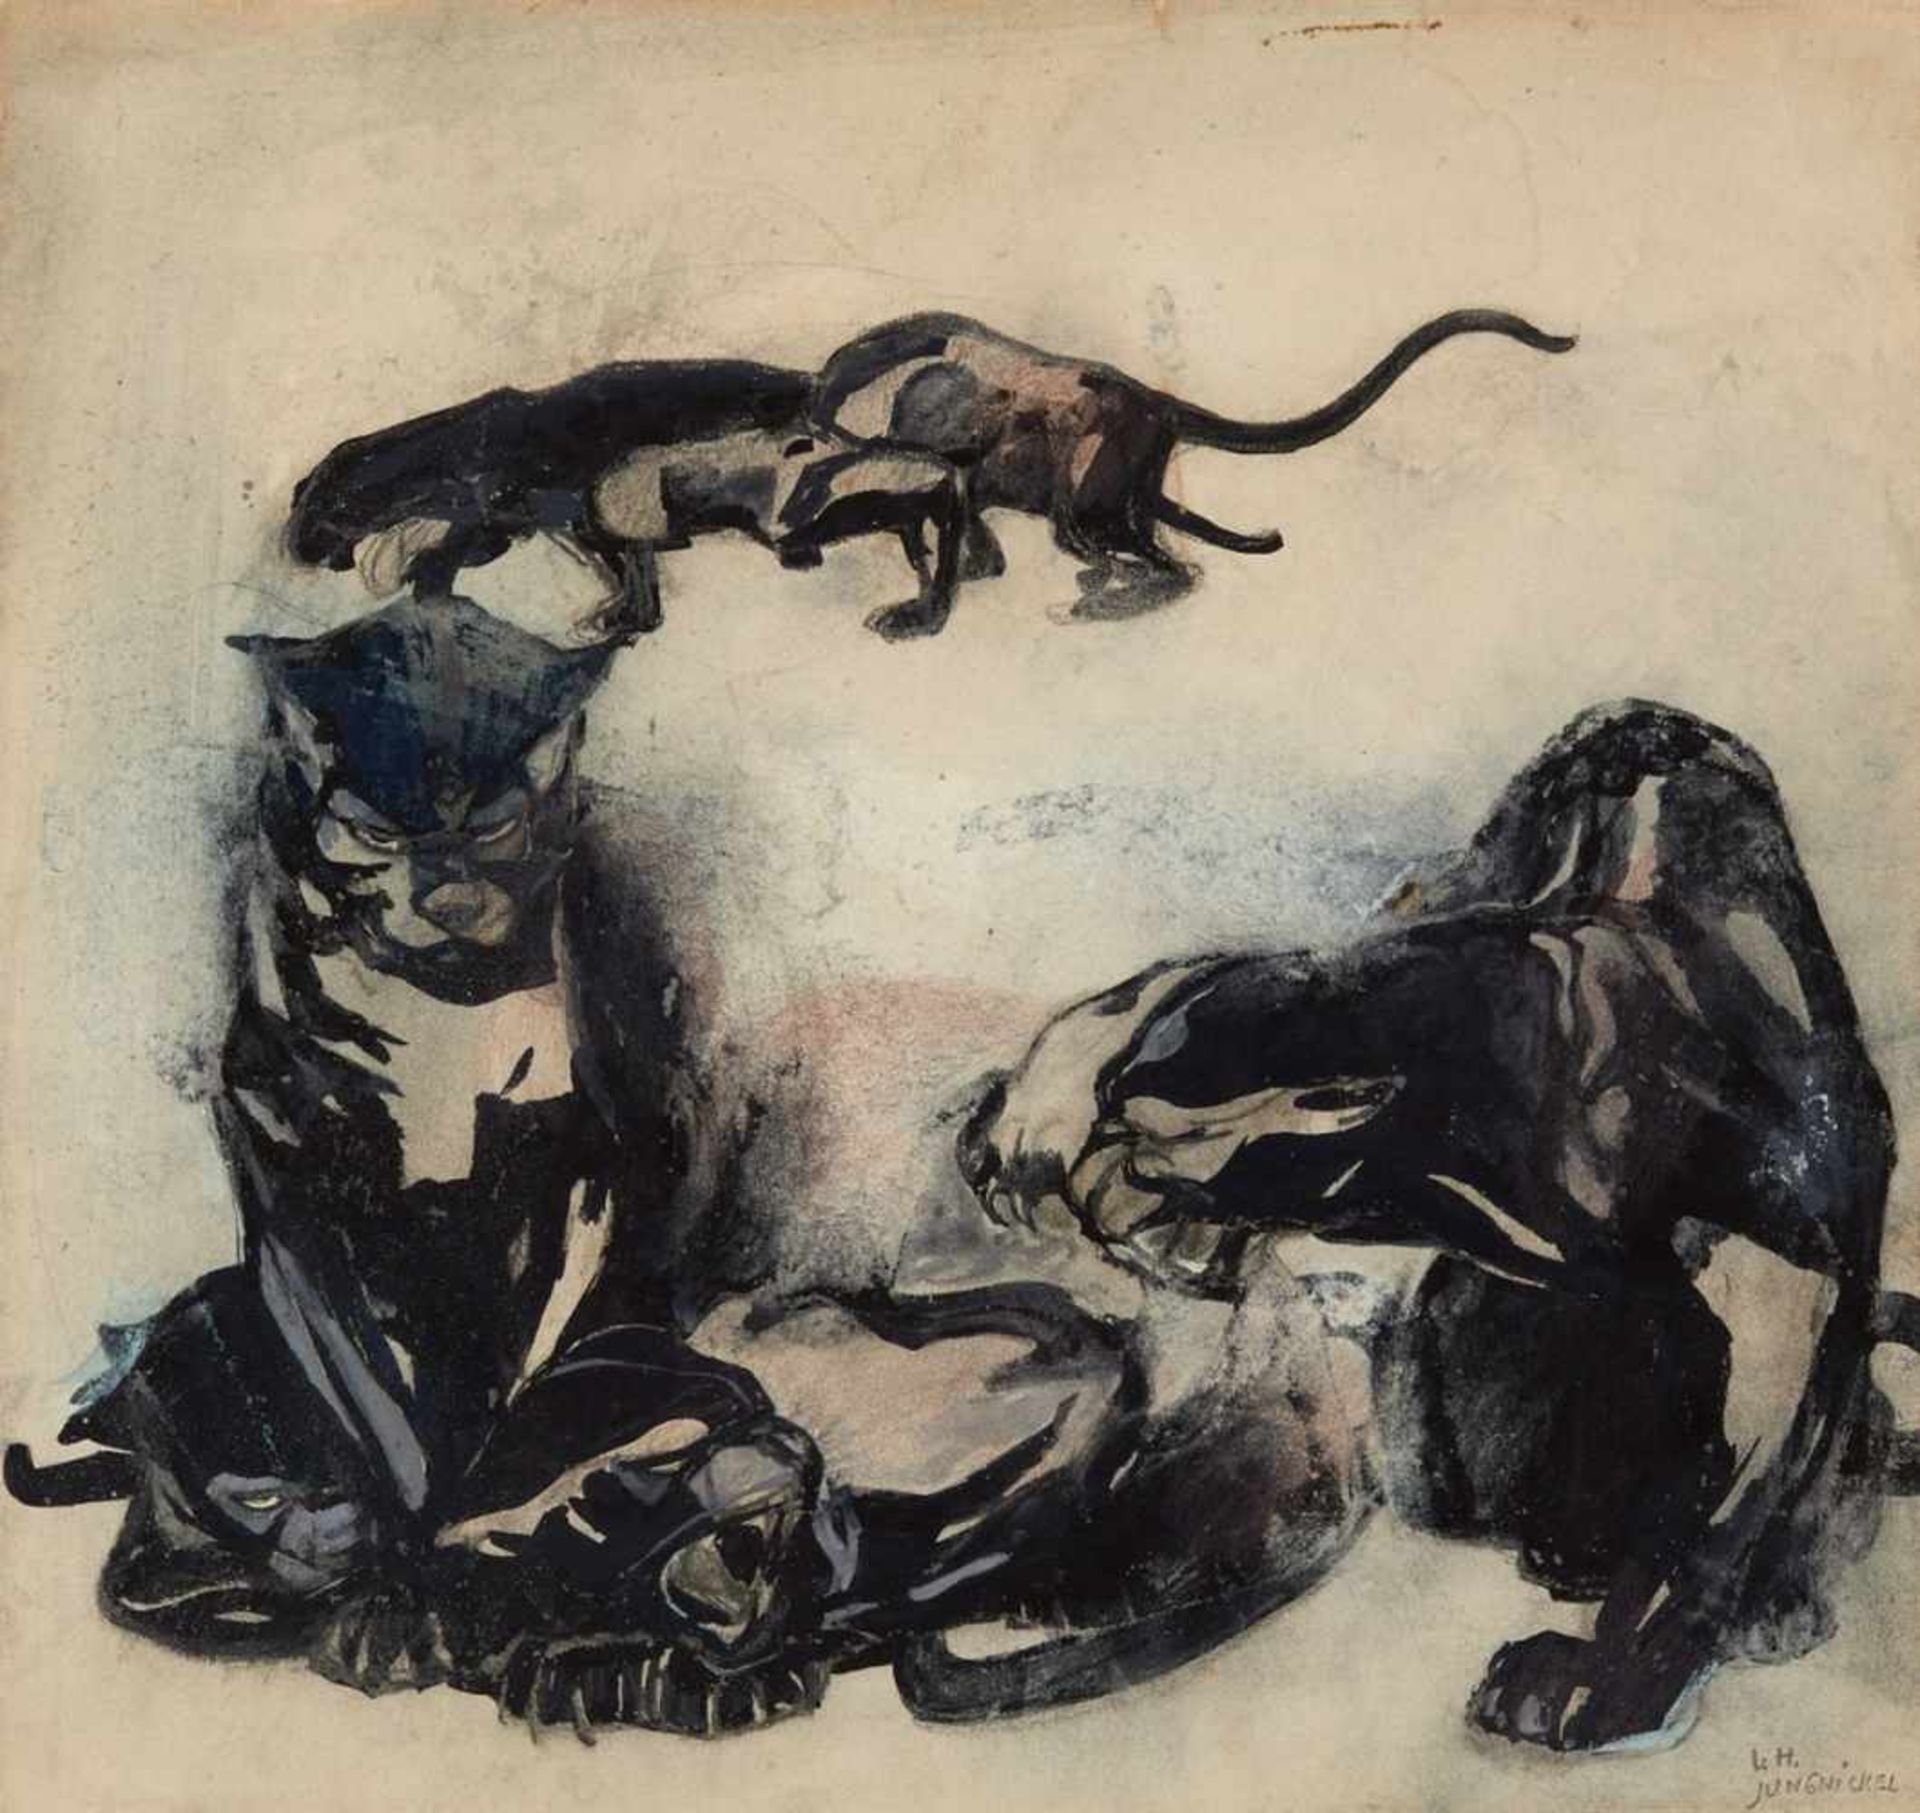 PanthergruppeTempera und Aquarell auf Papier. Unten rechts signiert: J.H. Jungnickel. 33,5 x 36 cm.